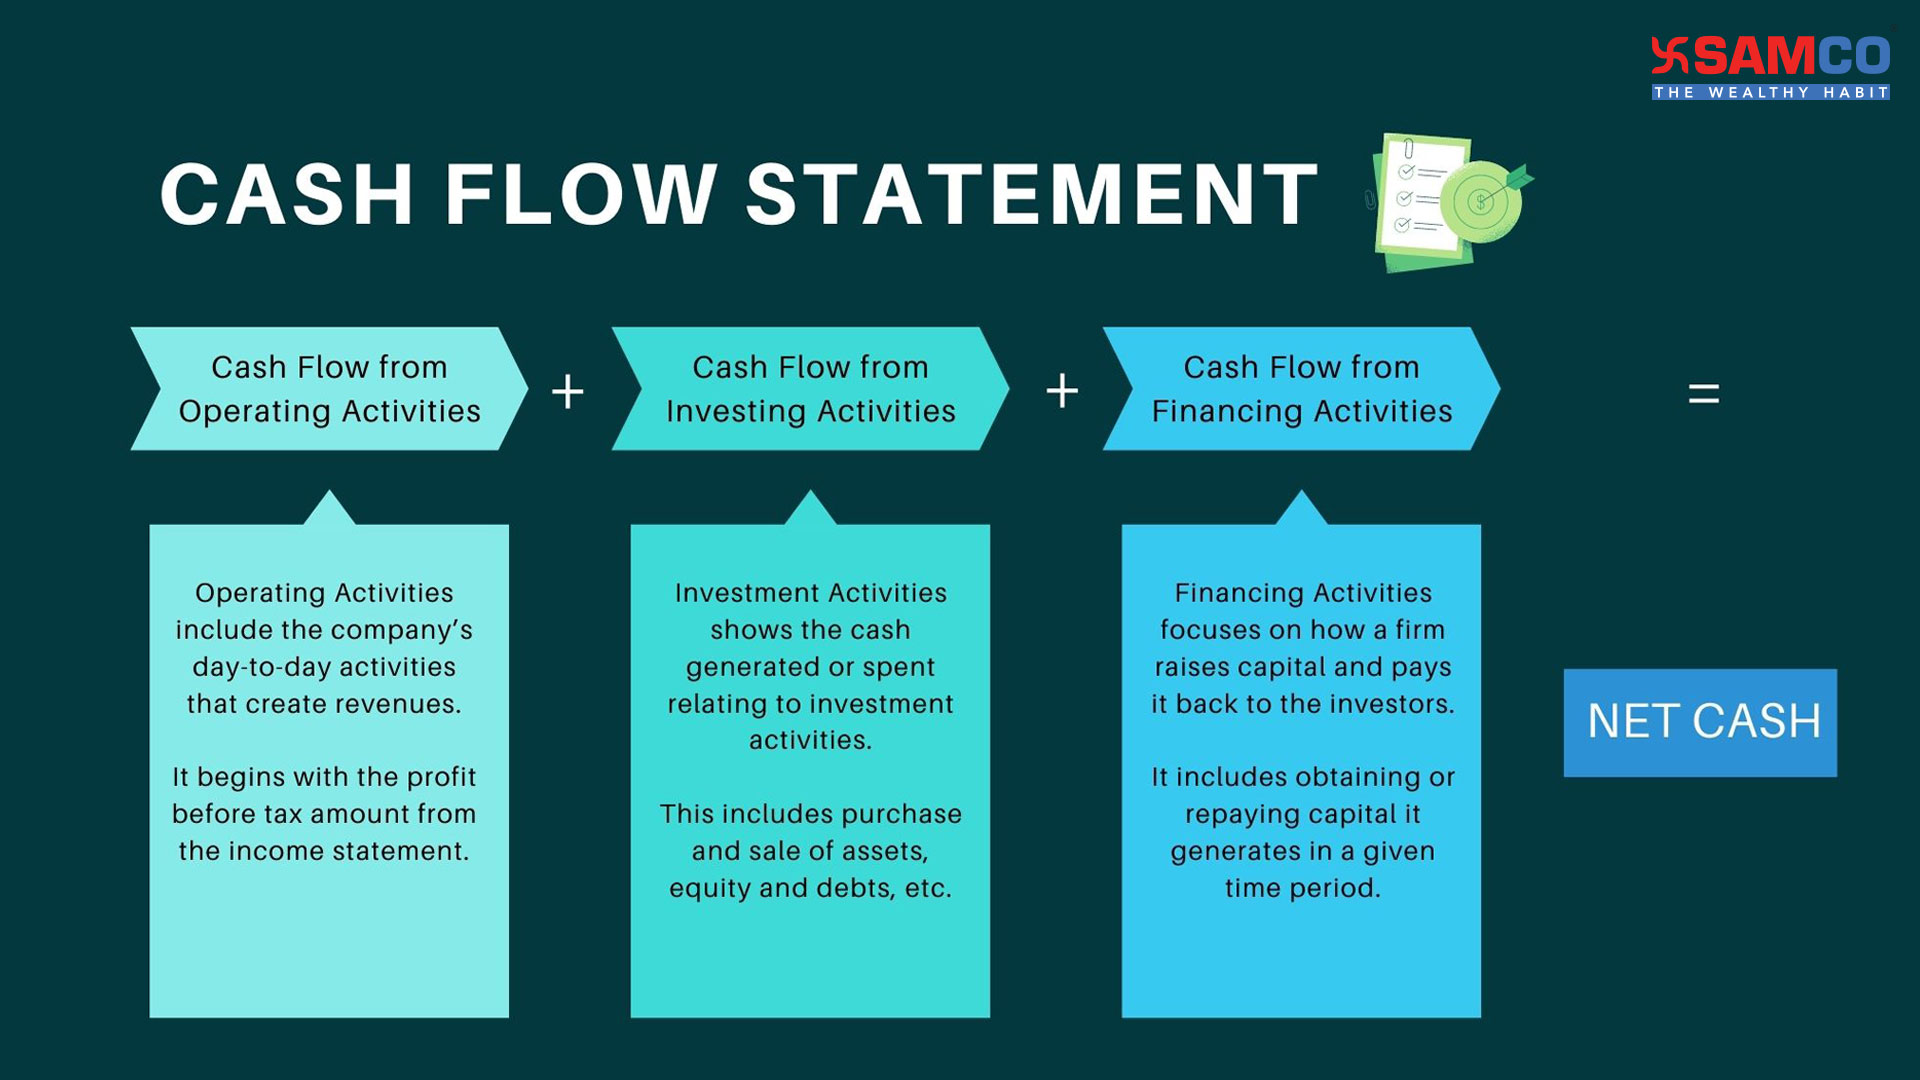 presentation on cash flow analysis